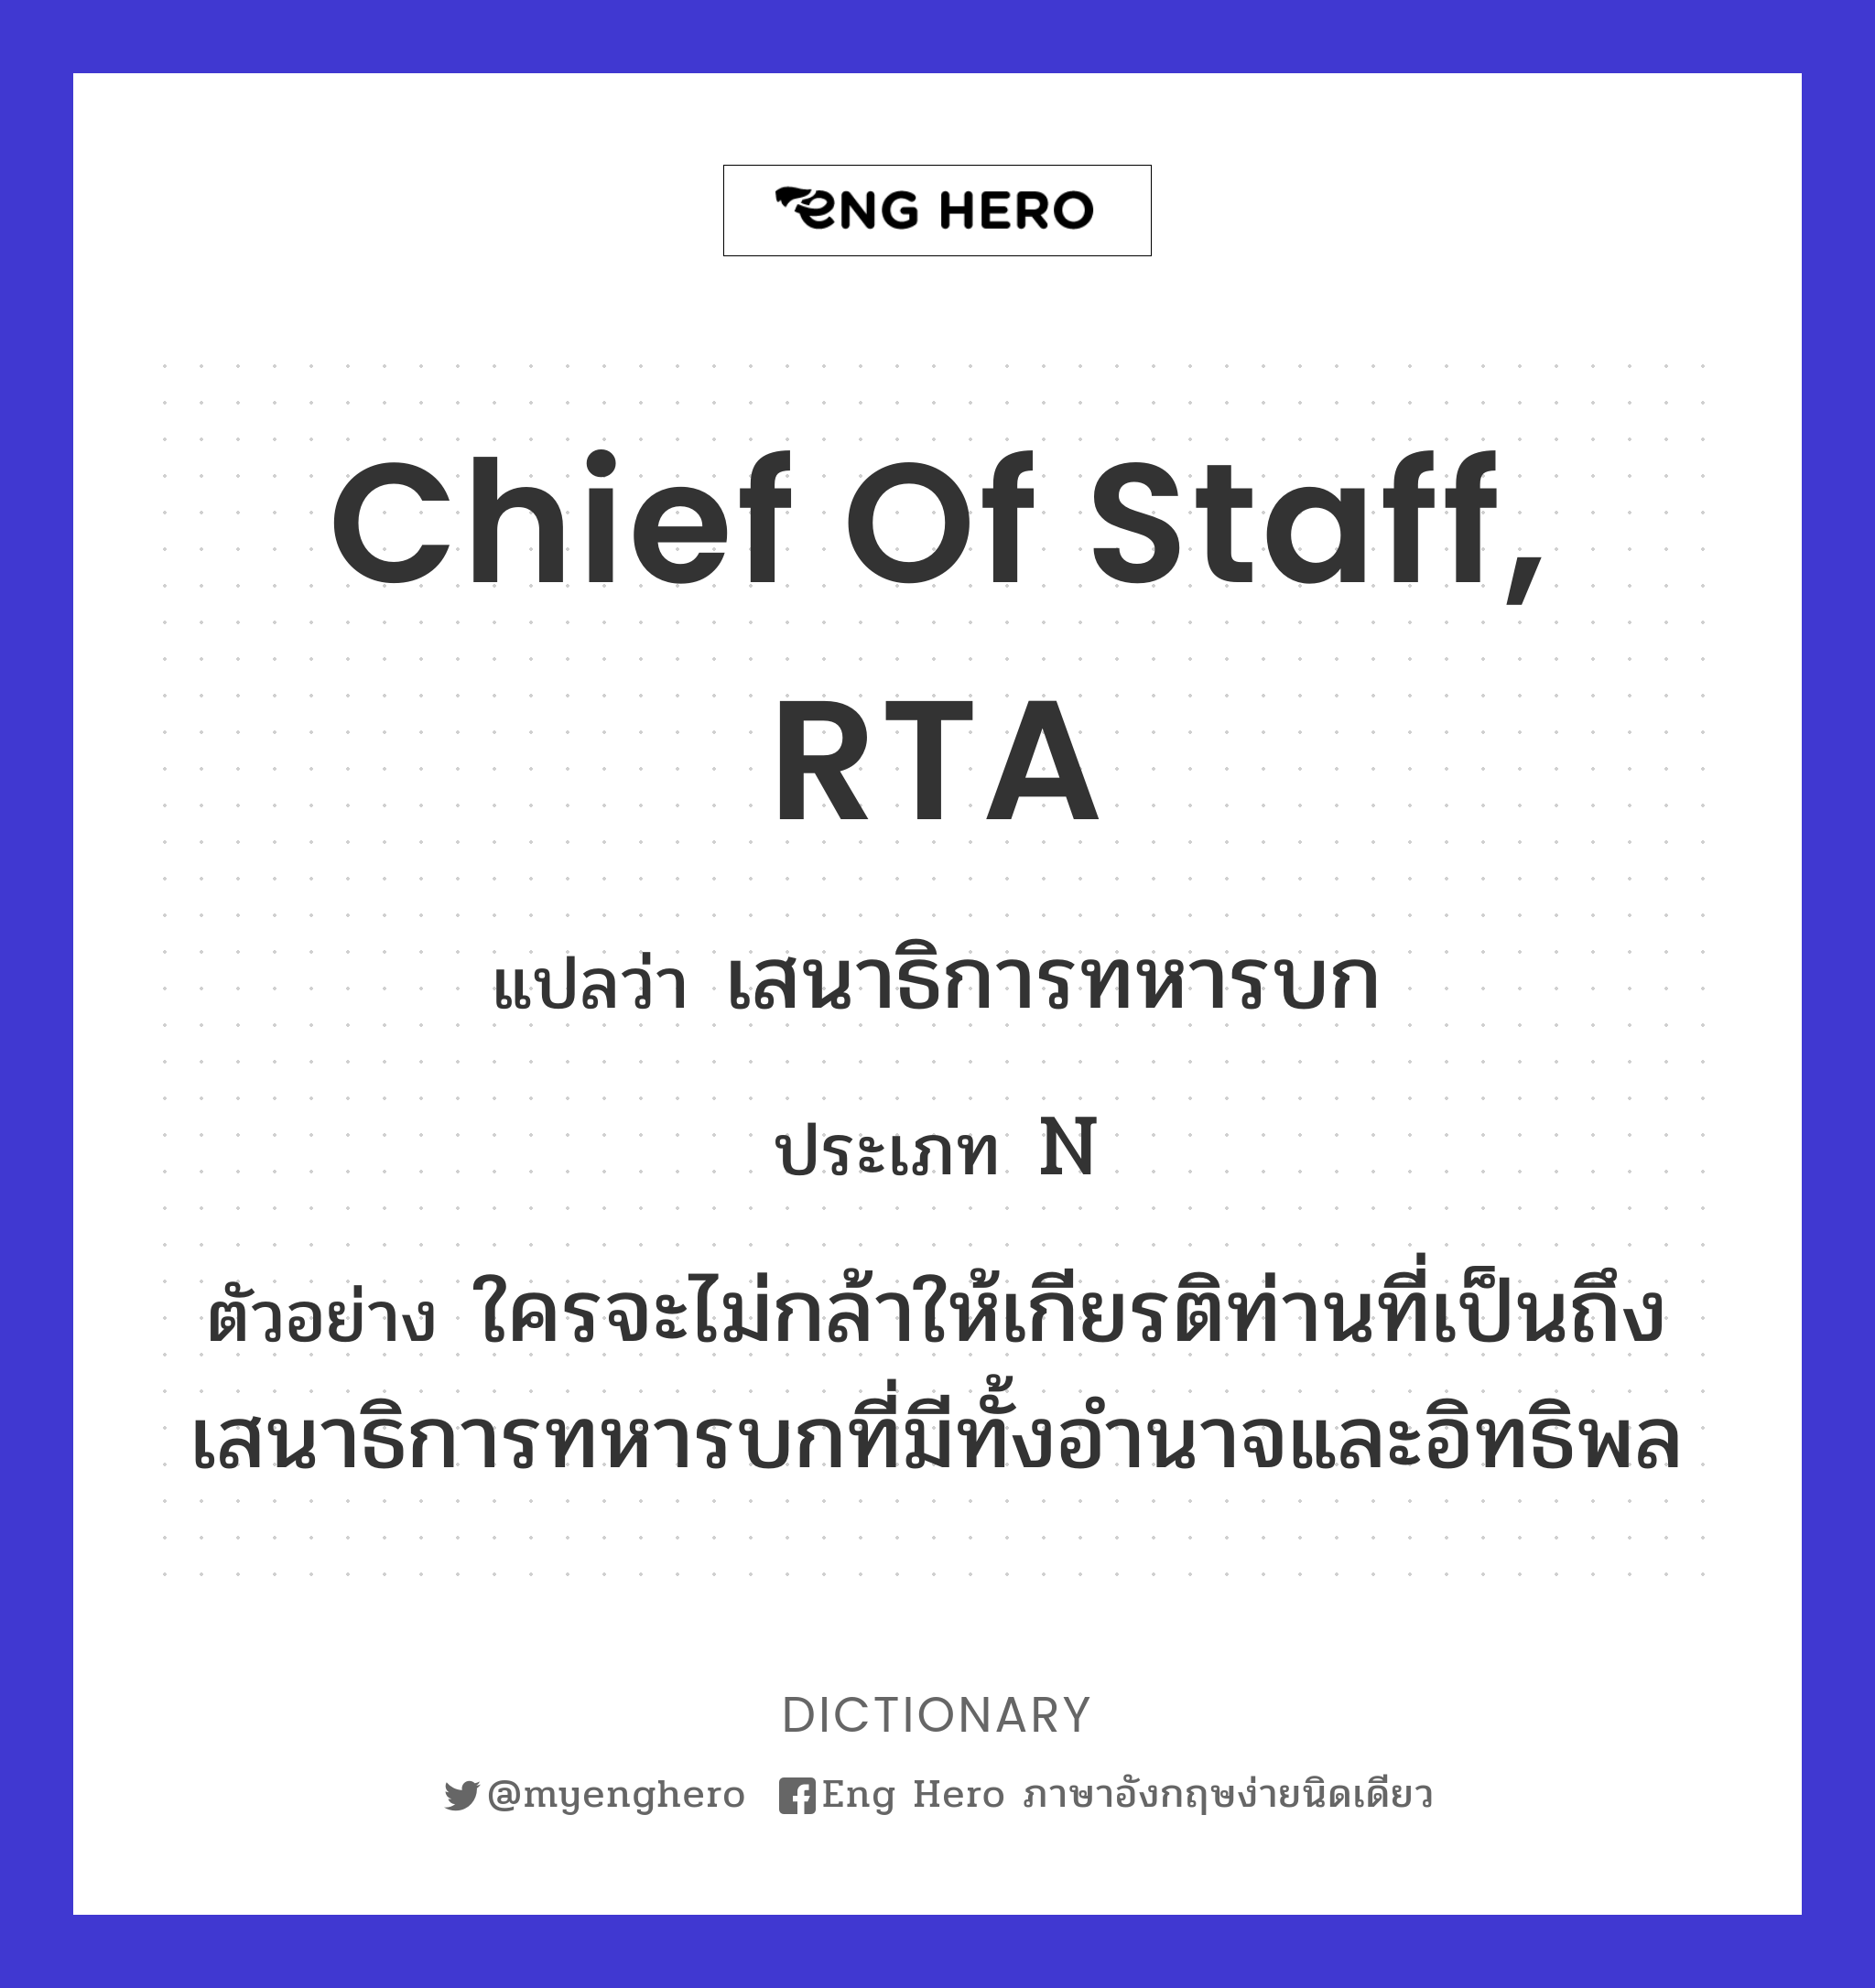 Chief of Staff, RTA